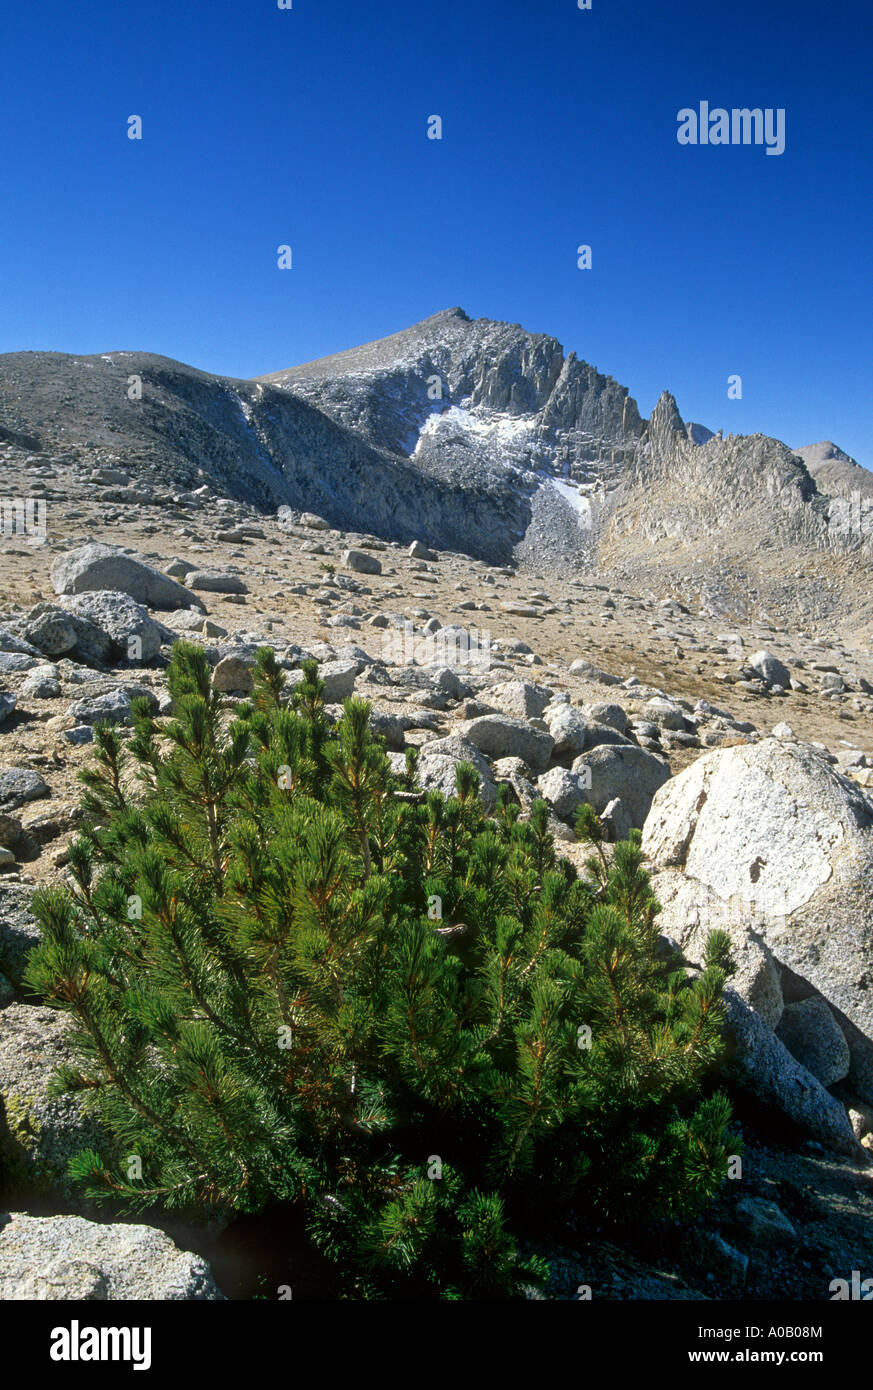 Landscape near Mono Pass in the John Muir Wilderness, Inyo National Forest, Sierra Nevada Mountains, California, USA Stock Photo